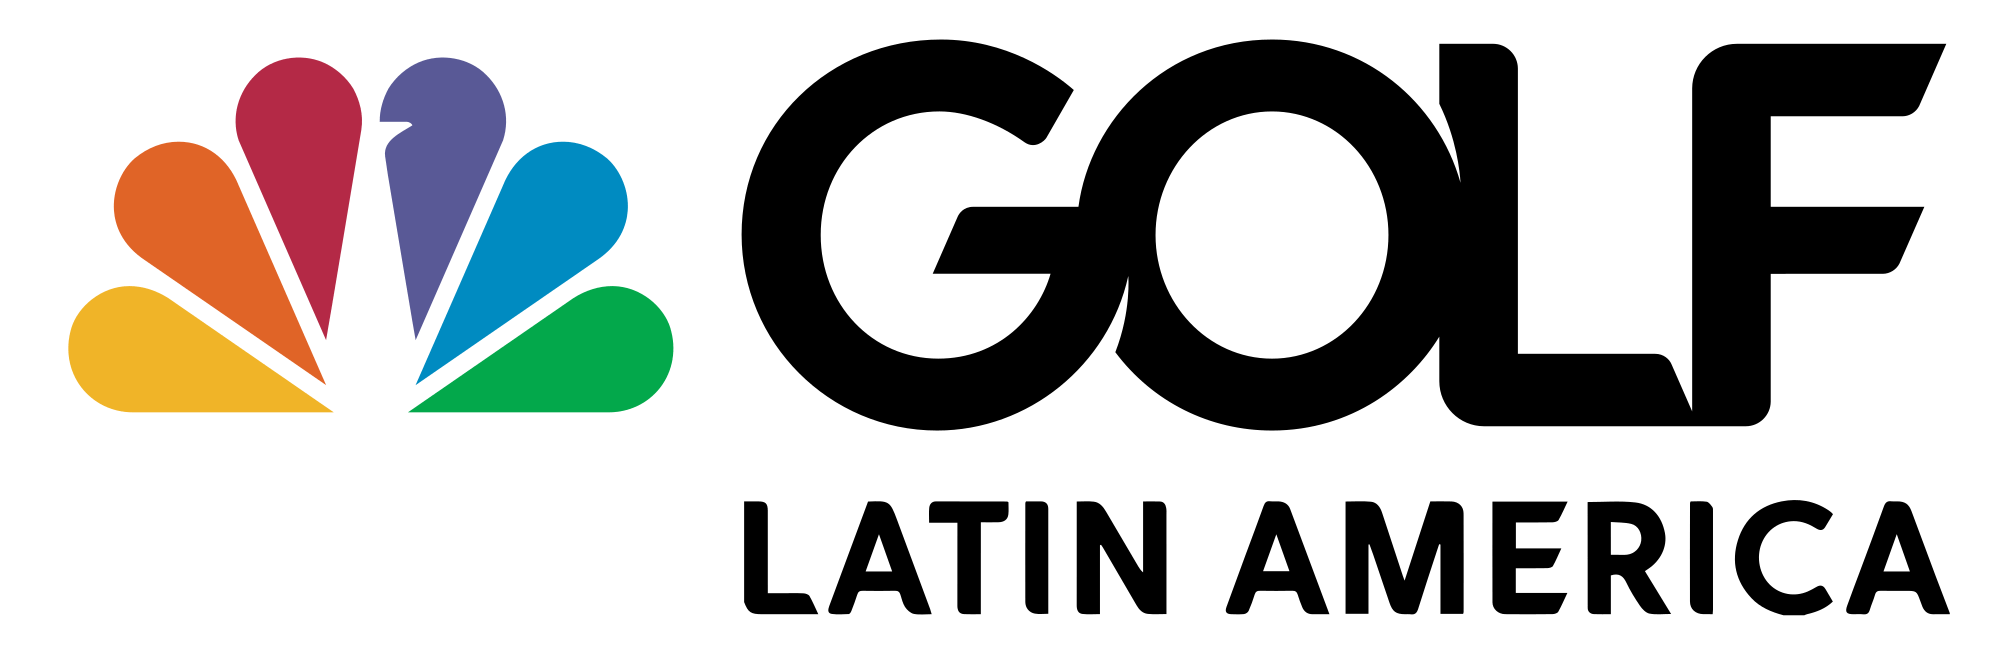 Latin America Logo - Golf Channel Latin America